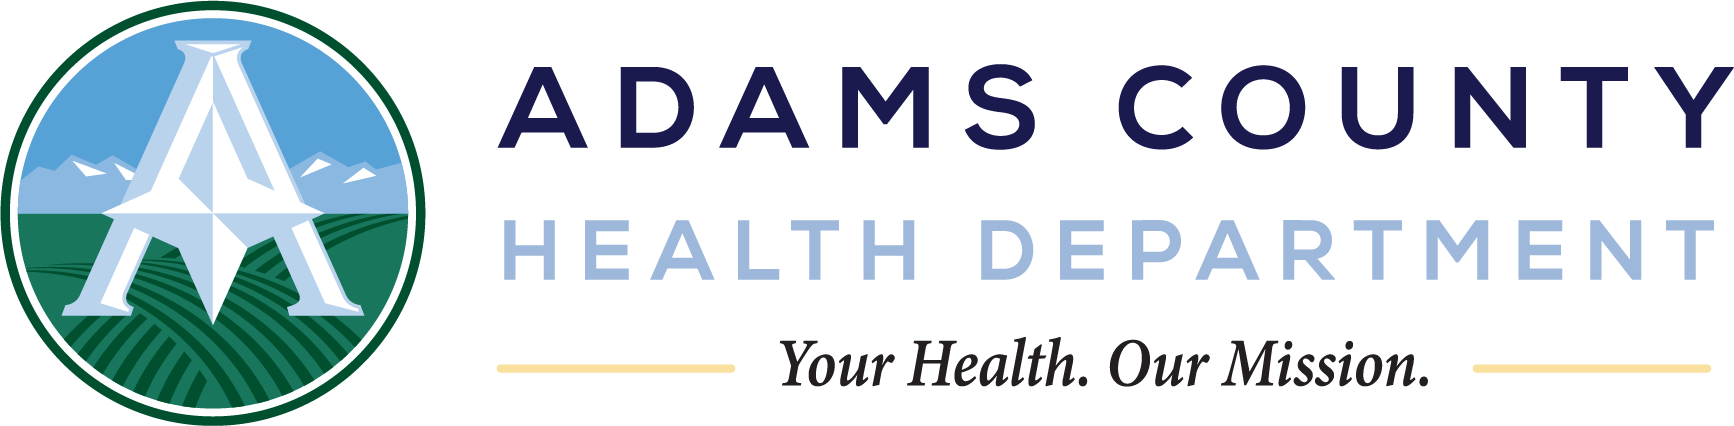 Adams County Health Department